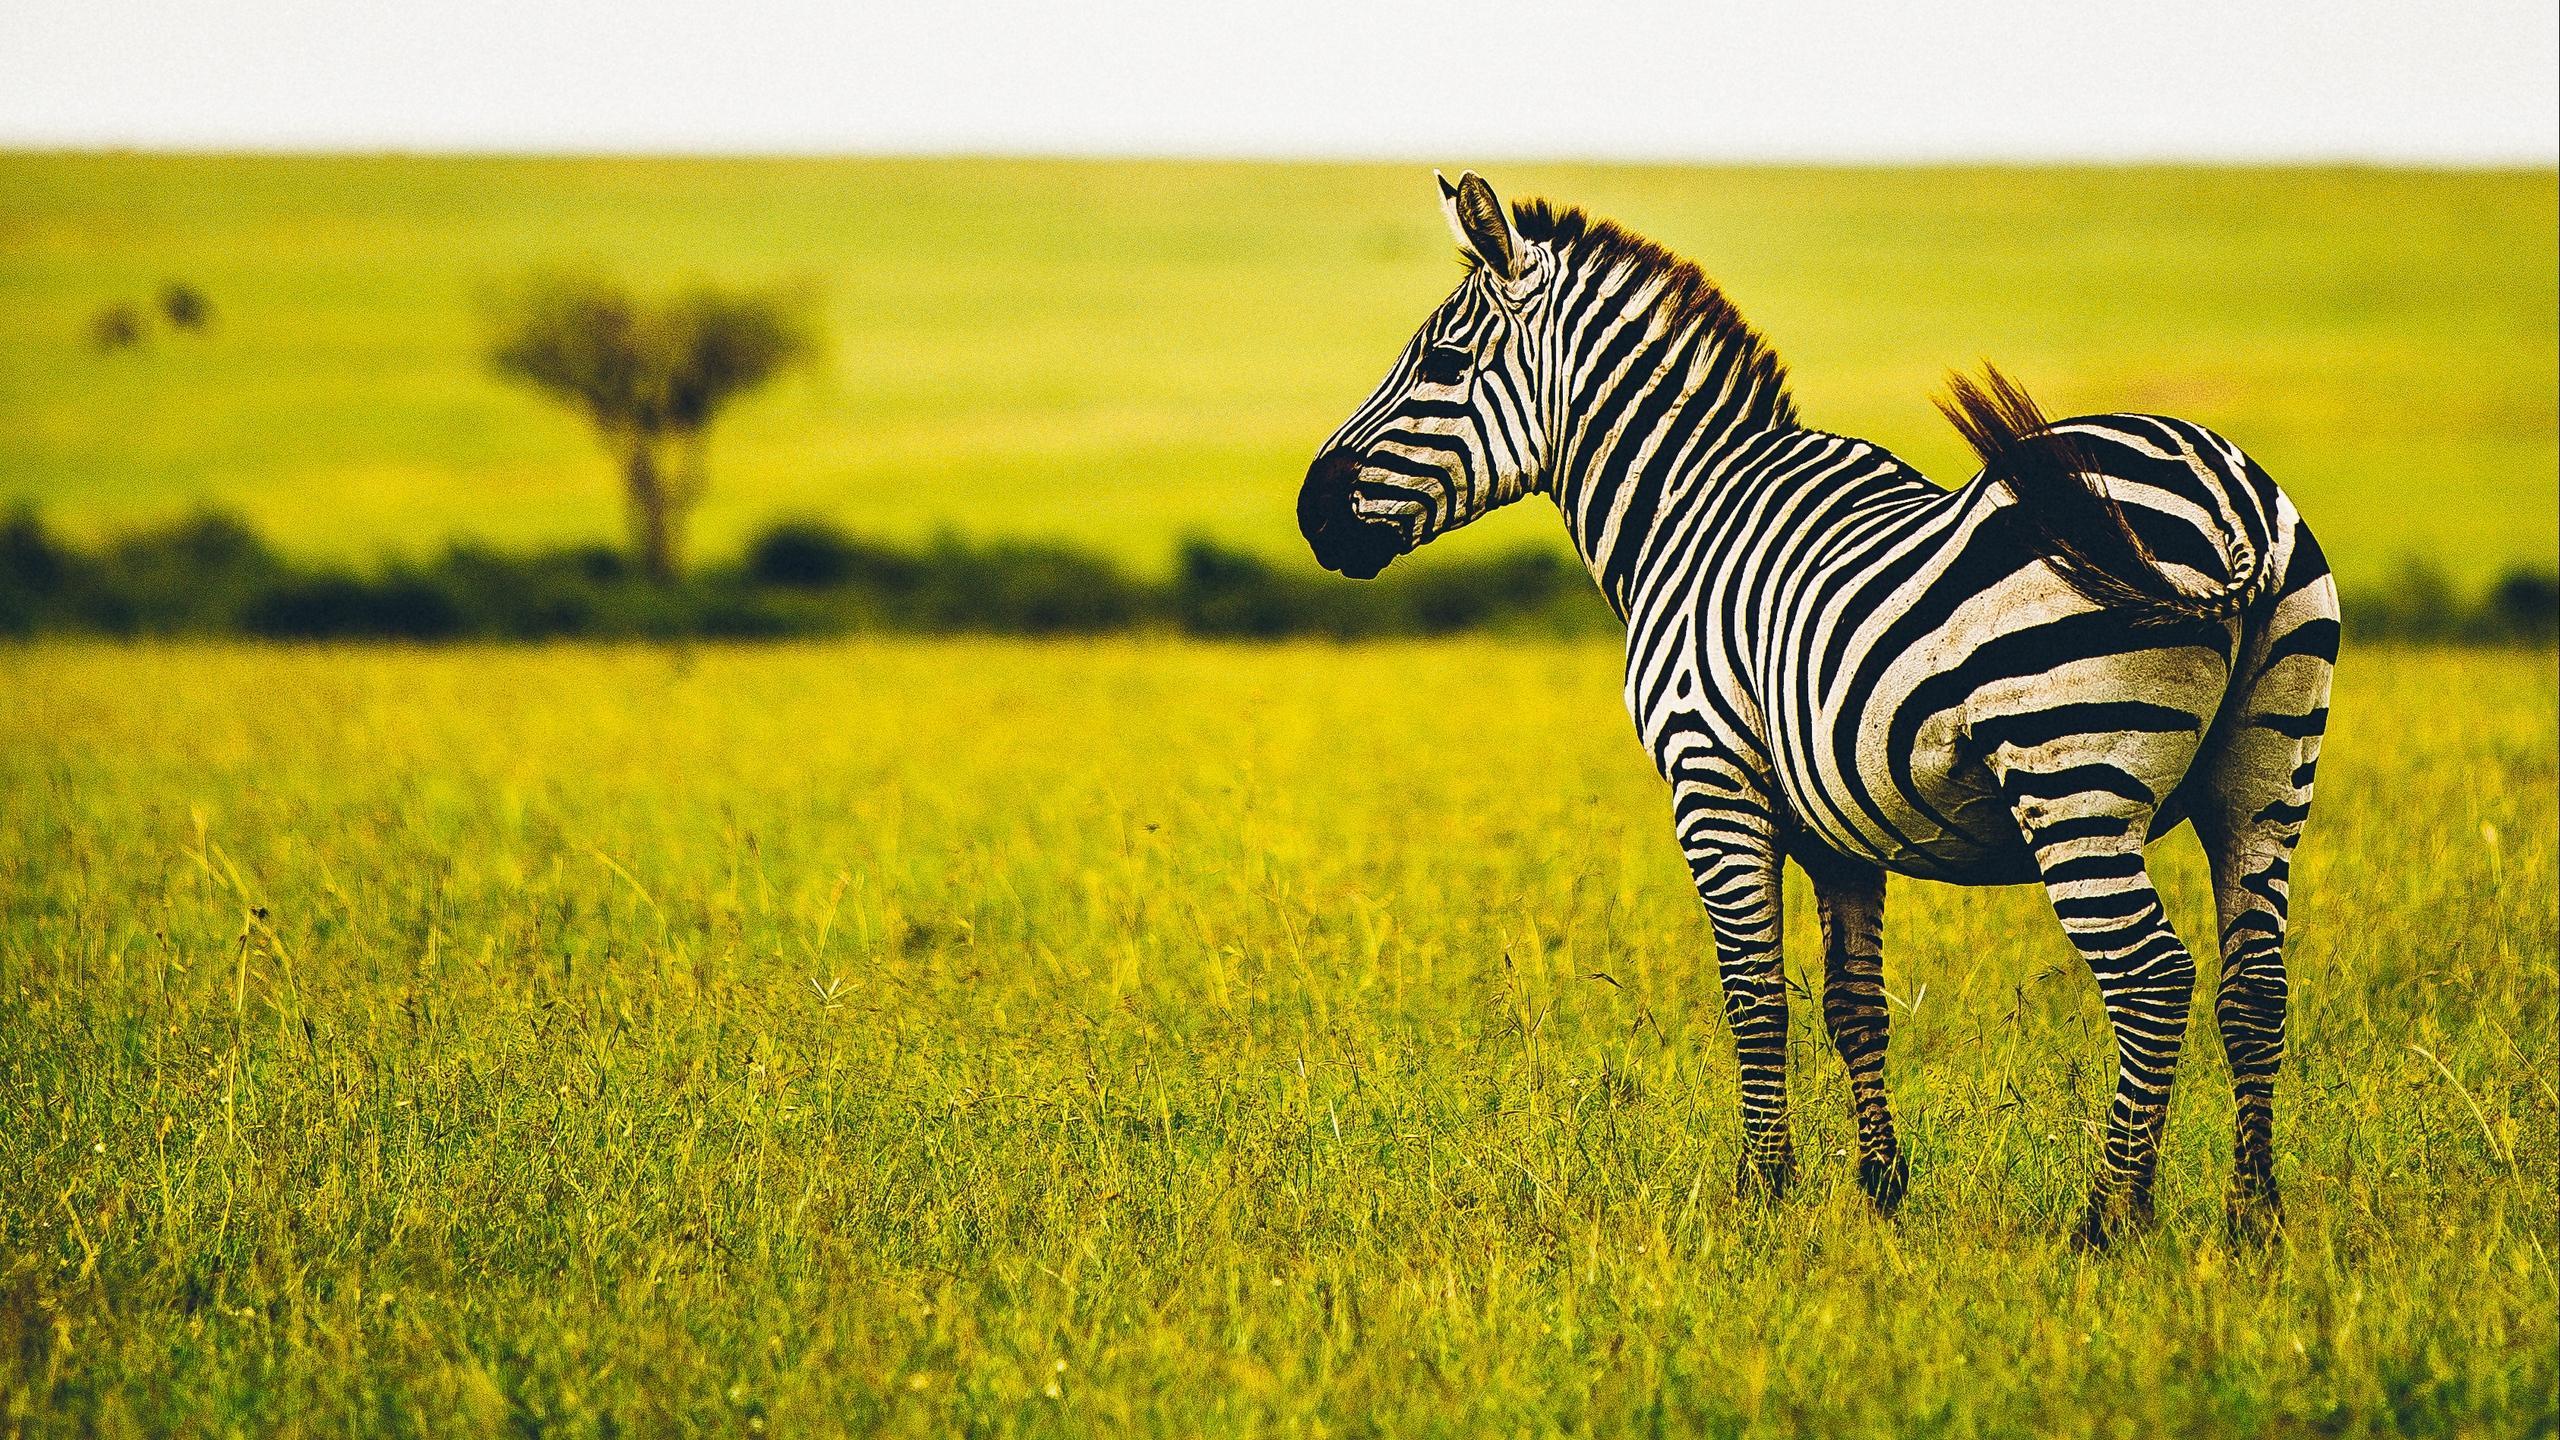 Download wallpaper 2560x1440 zebra, savanna, wildlife, animal